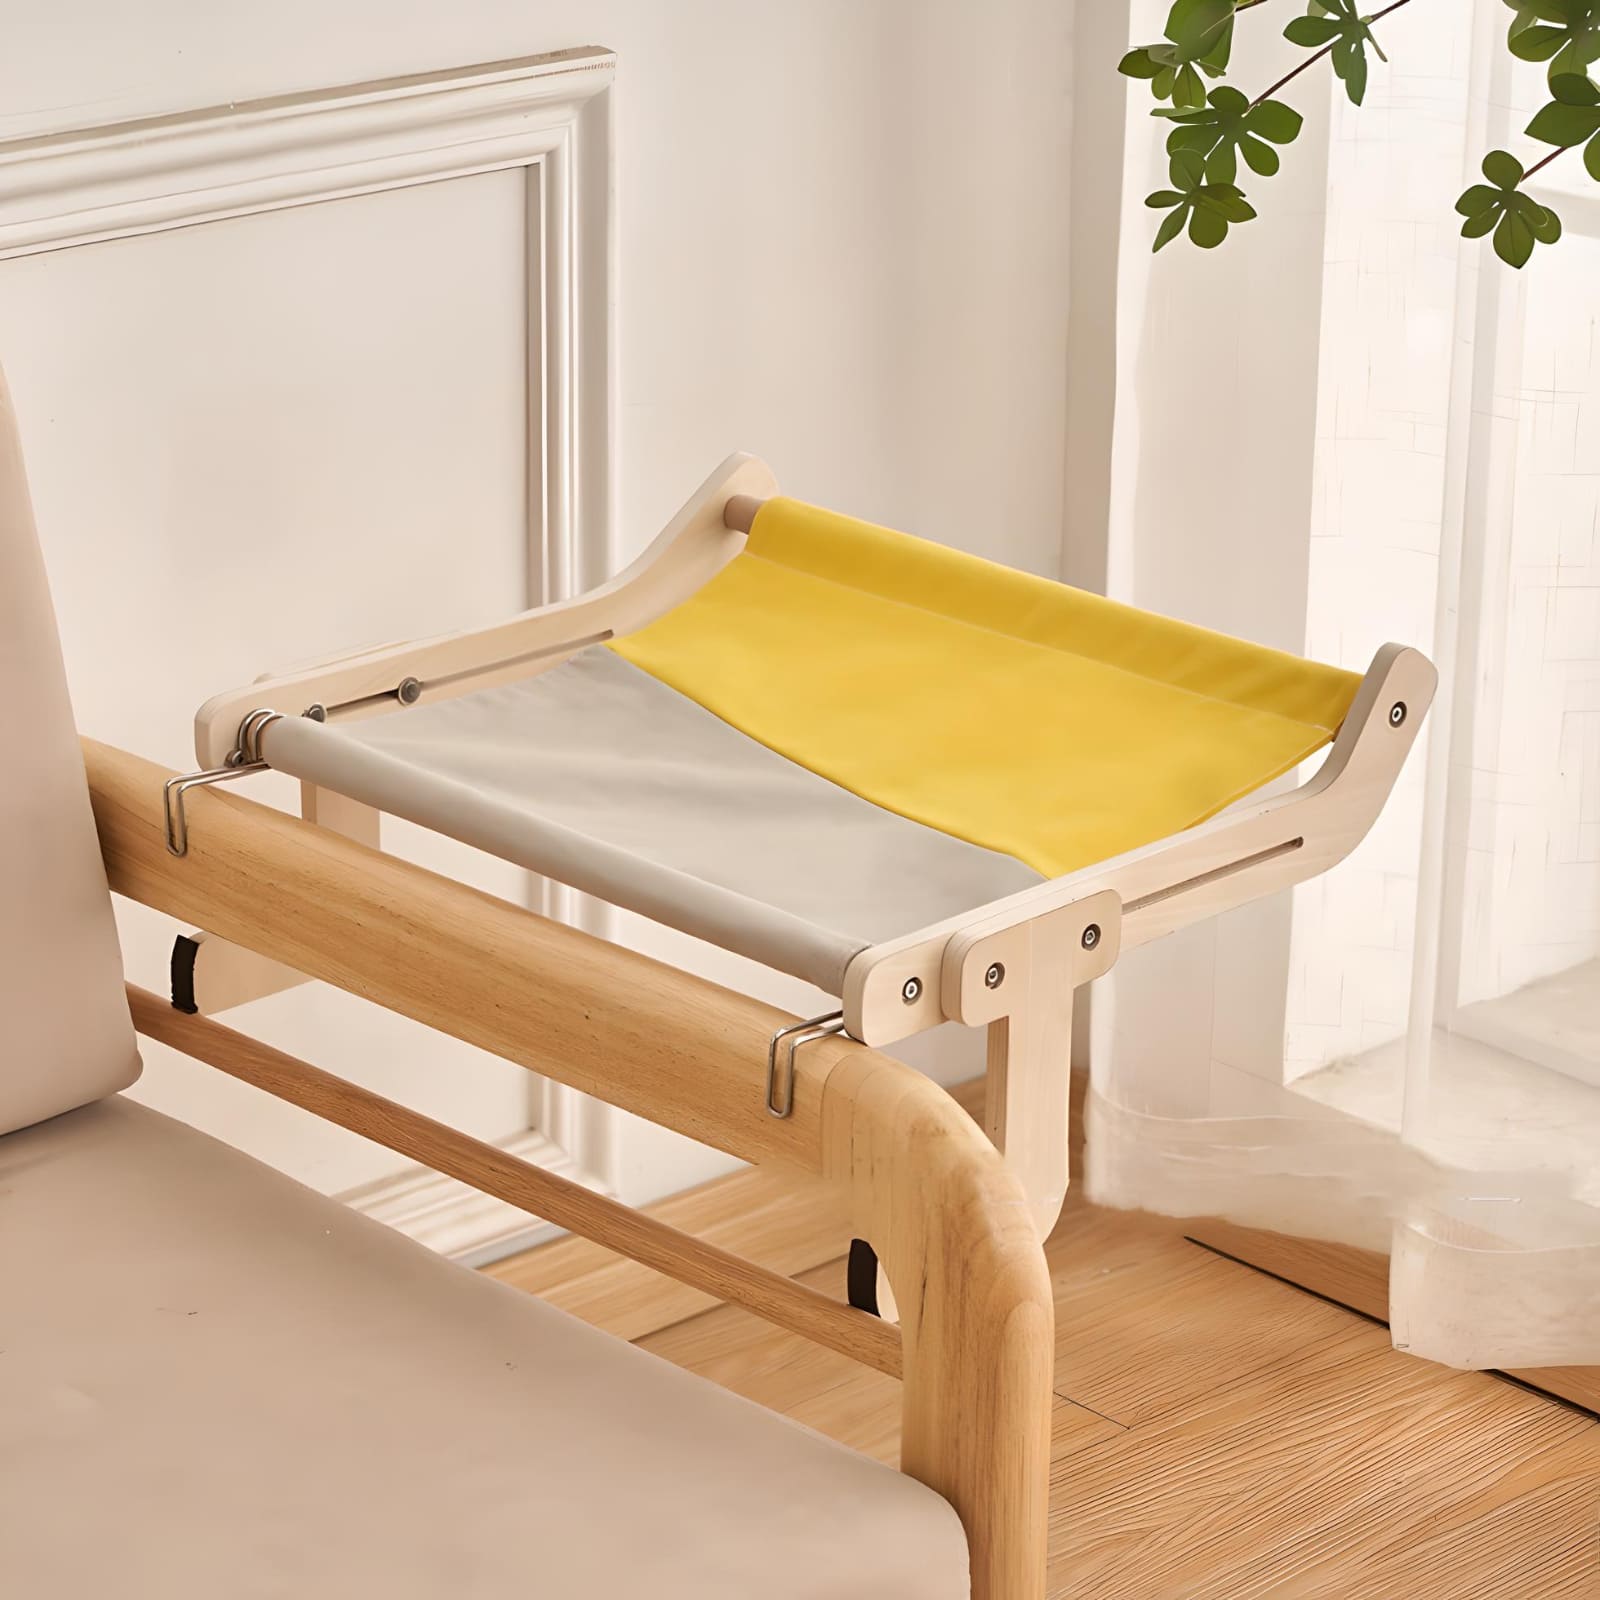 wooden-cat-hammock-yellow-color